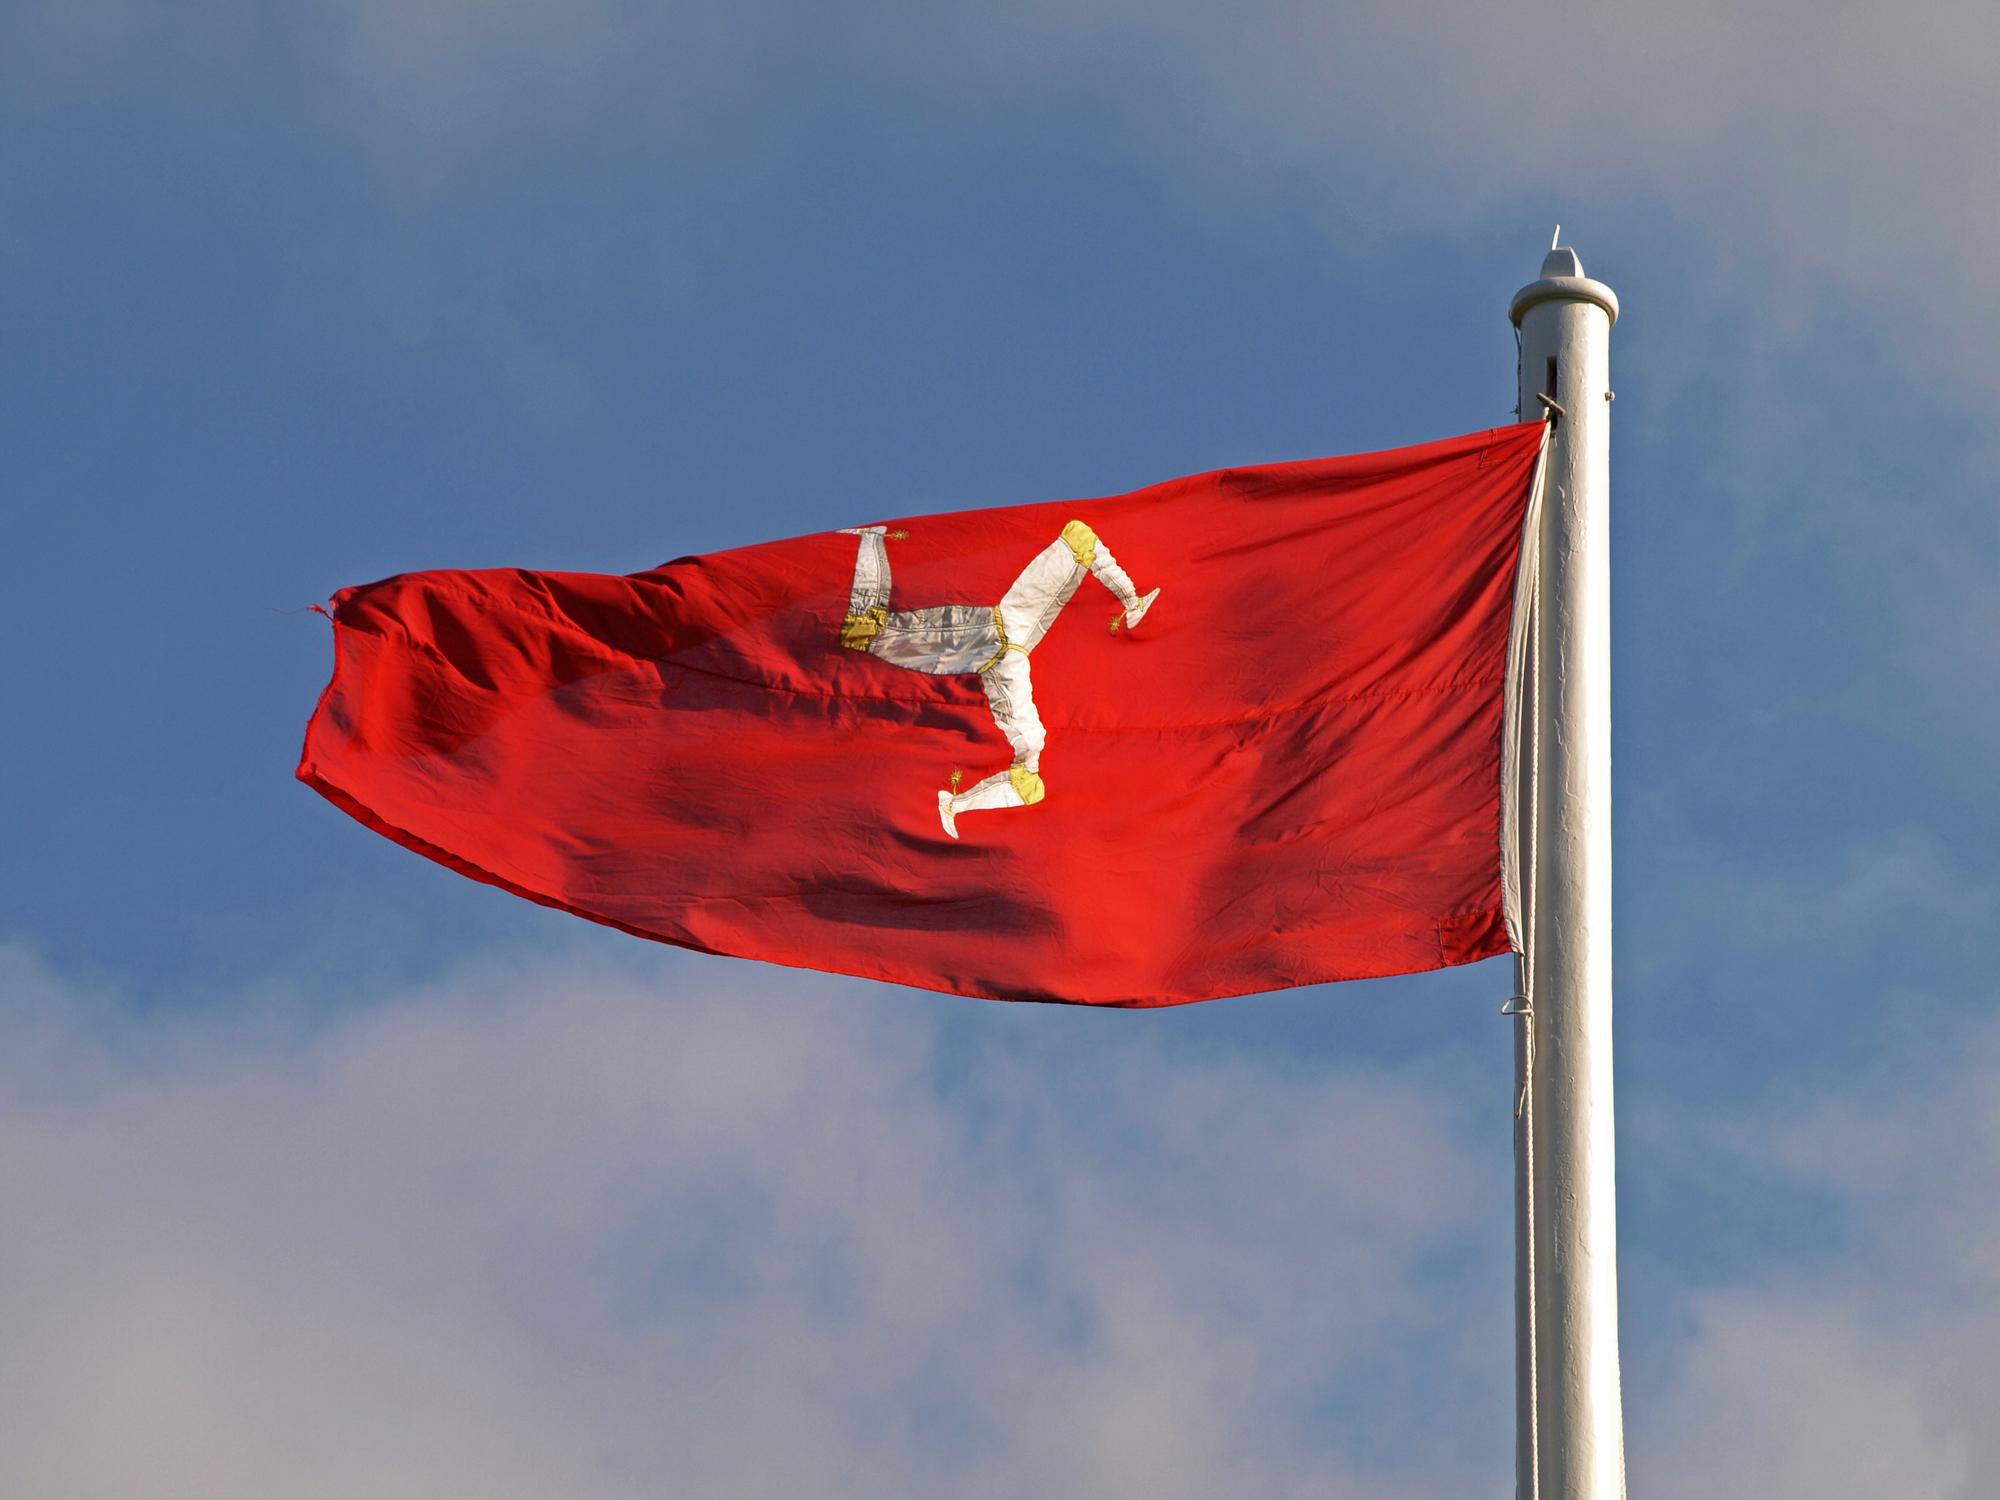 Isle of Man minister reveals plan to avoid EU tax blacklist